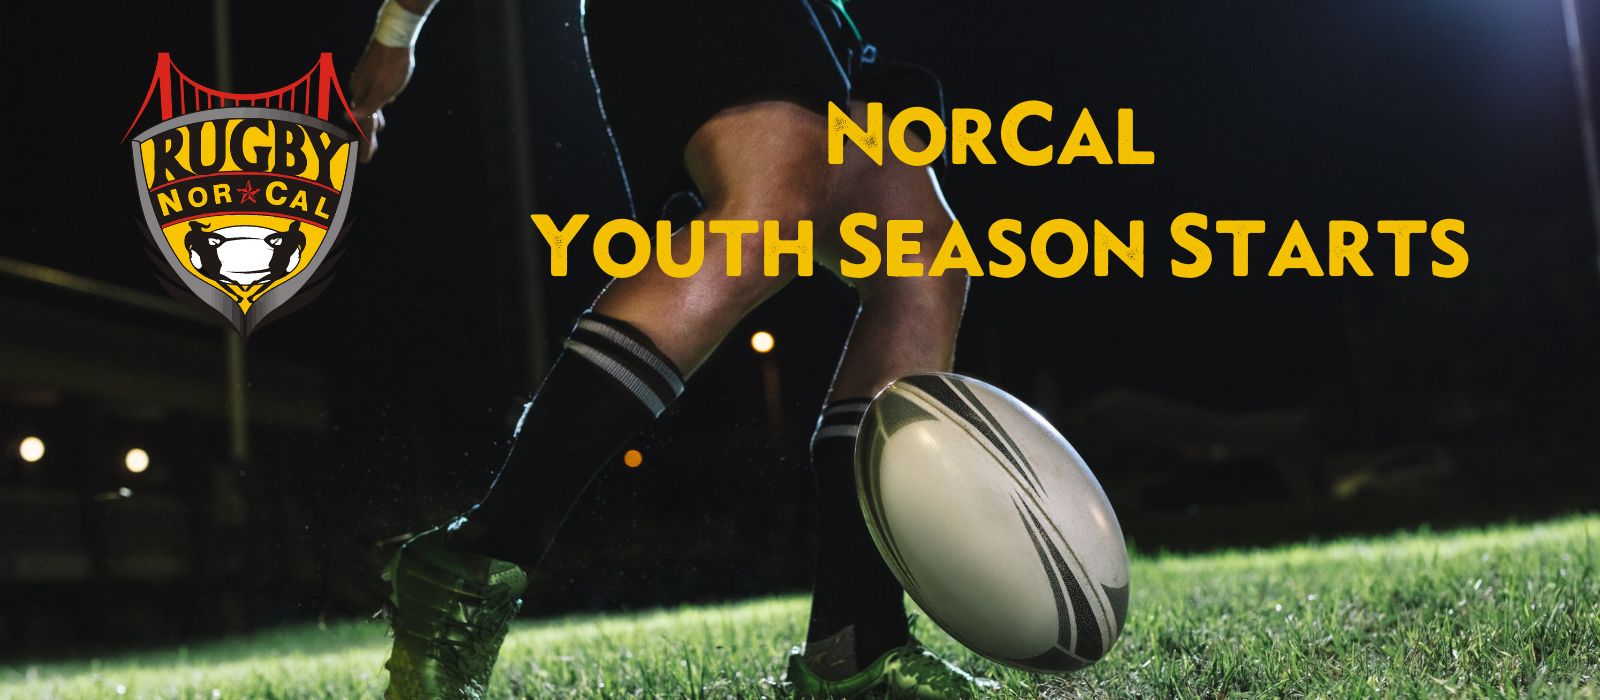 NorCal youth season starts banner